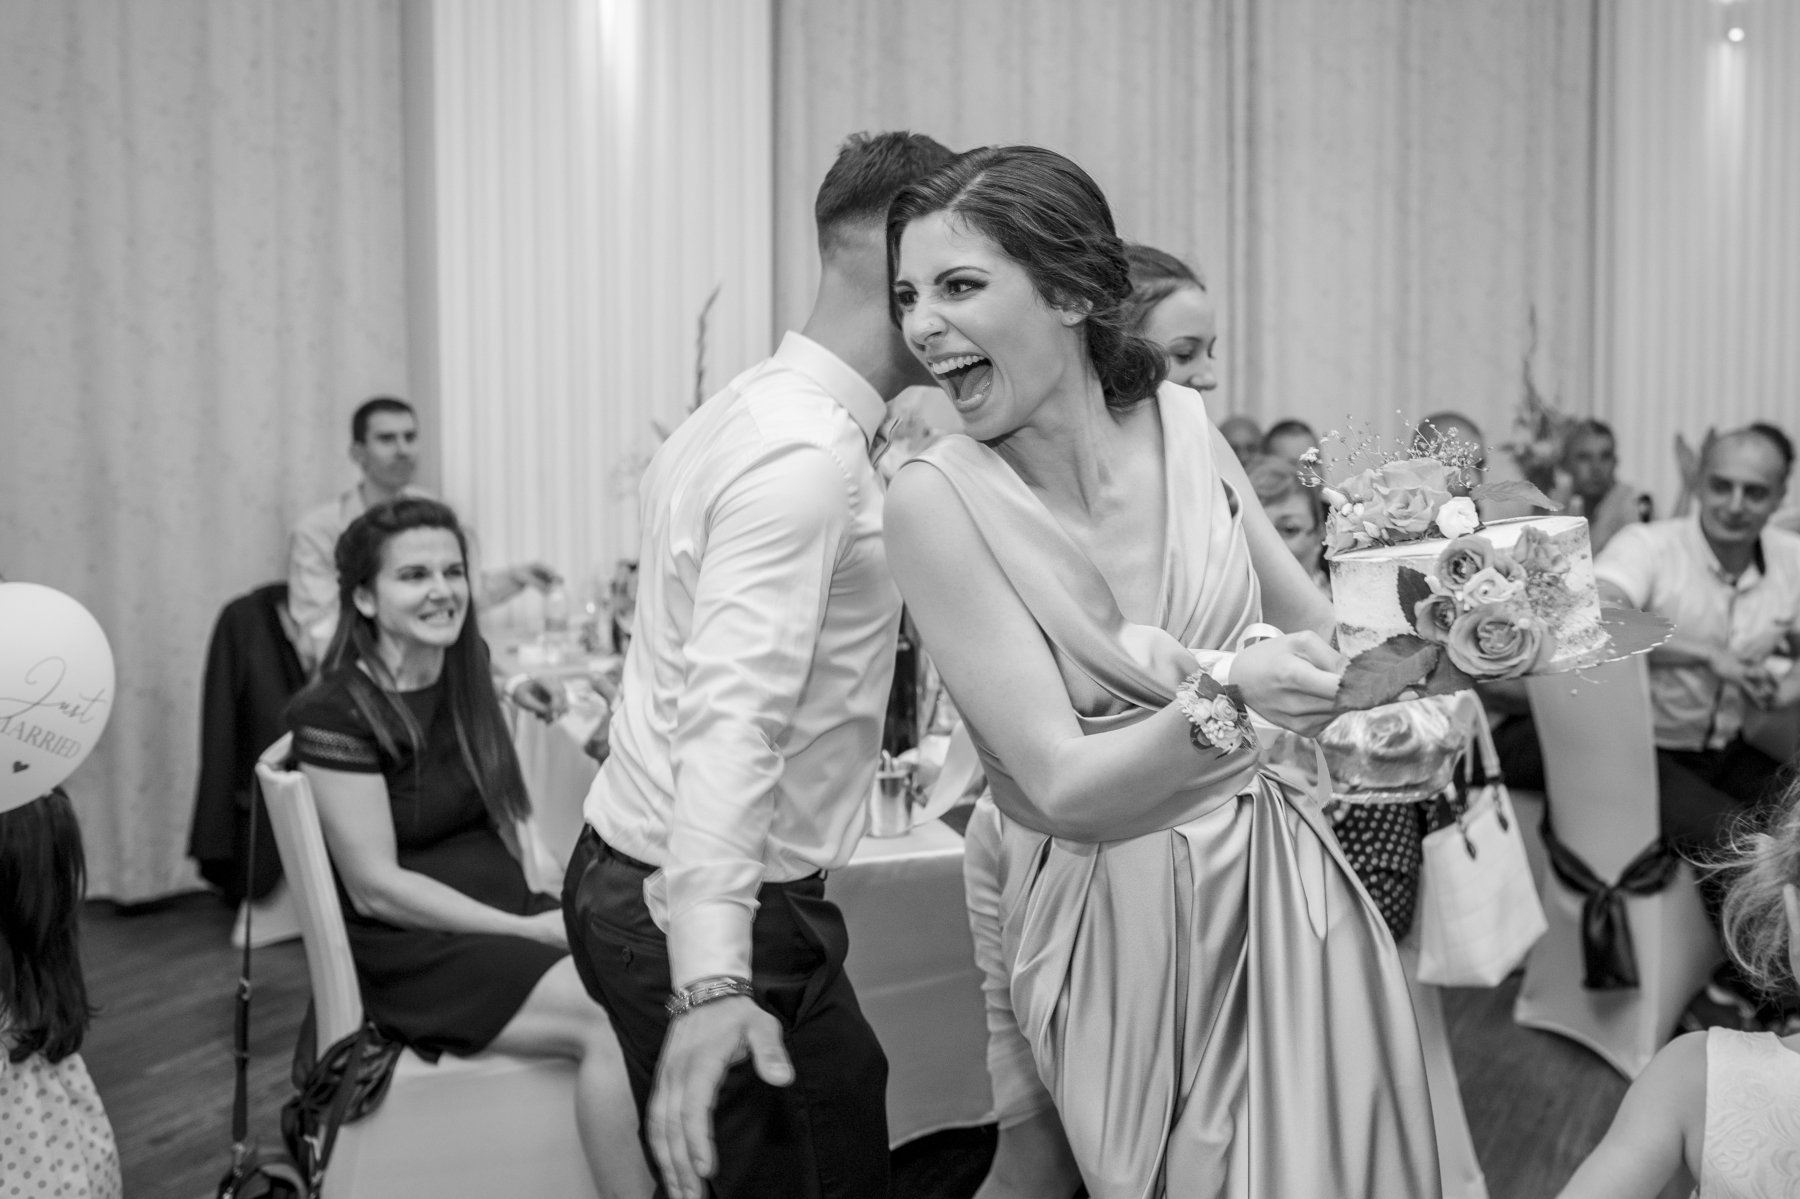 #people #culture #action #love #best #wedding #story #smyle #moment #emotion #black&white #weddingparty, Nikolay Nikolov